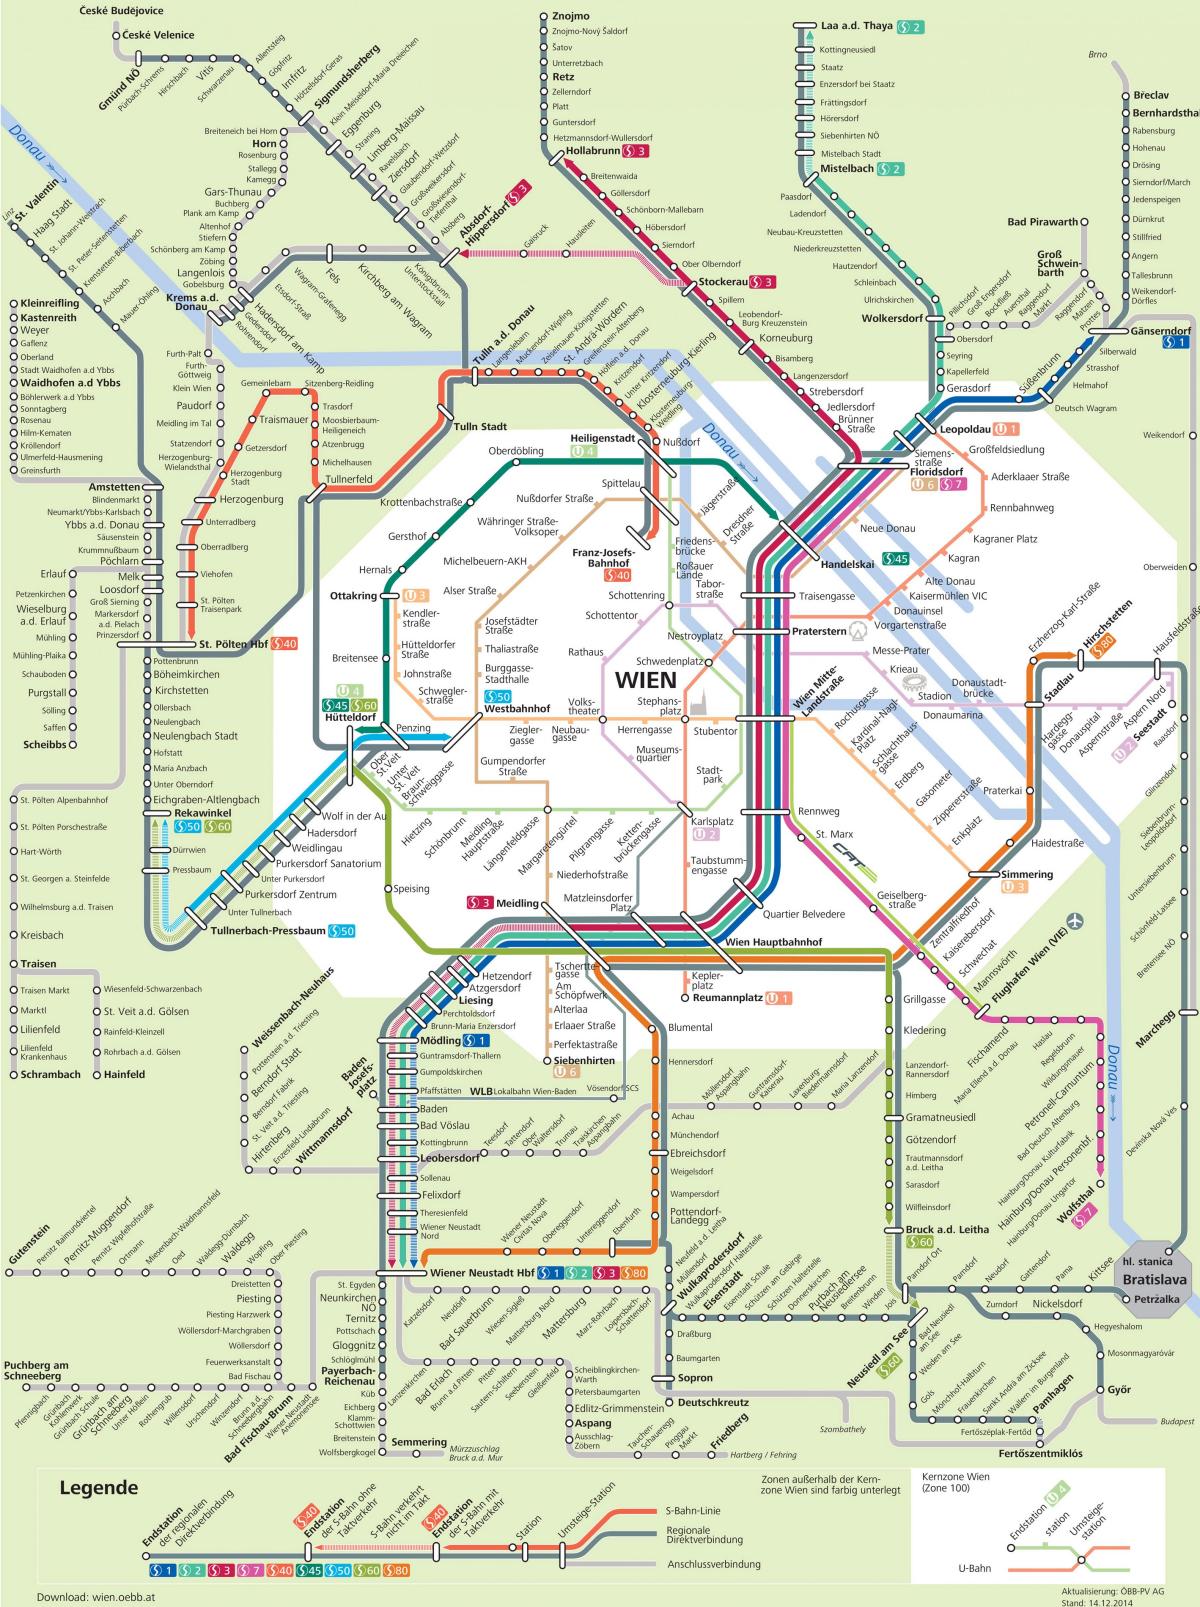 Peta Vienna s7 laluan